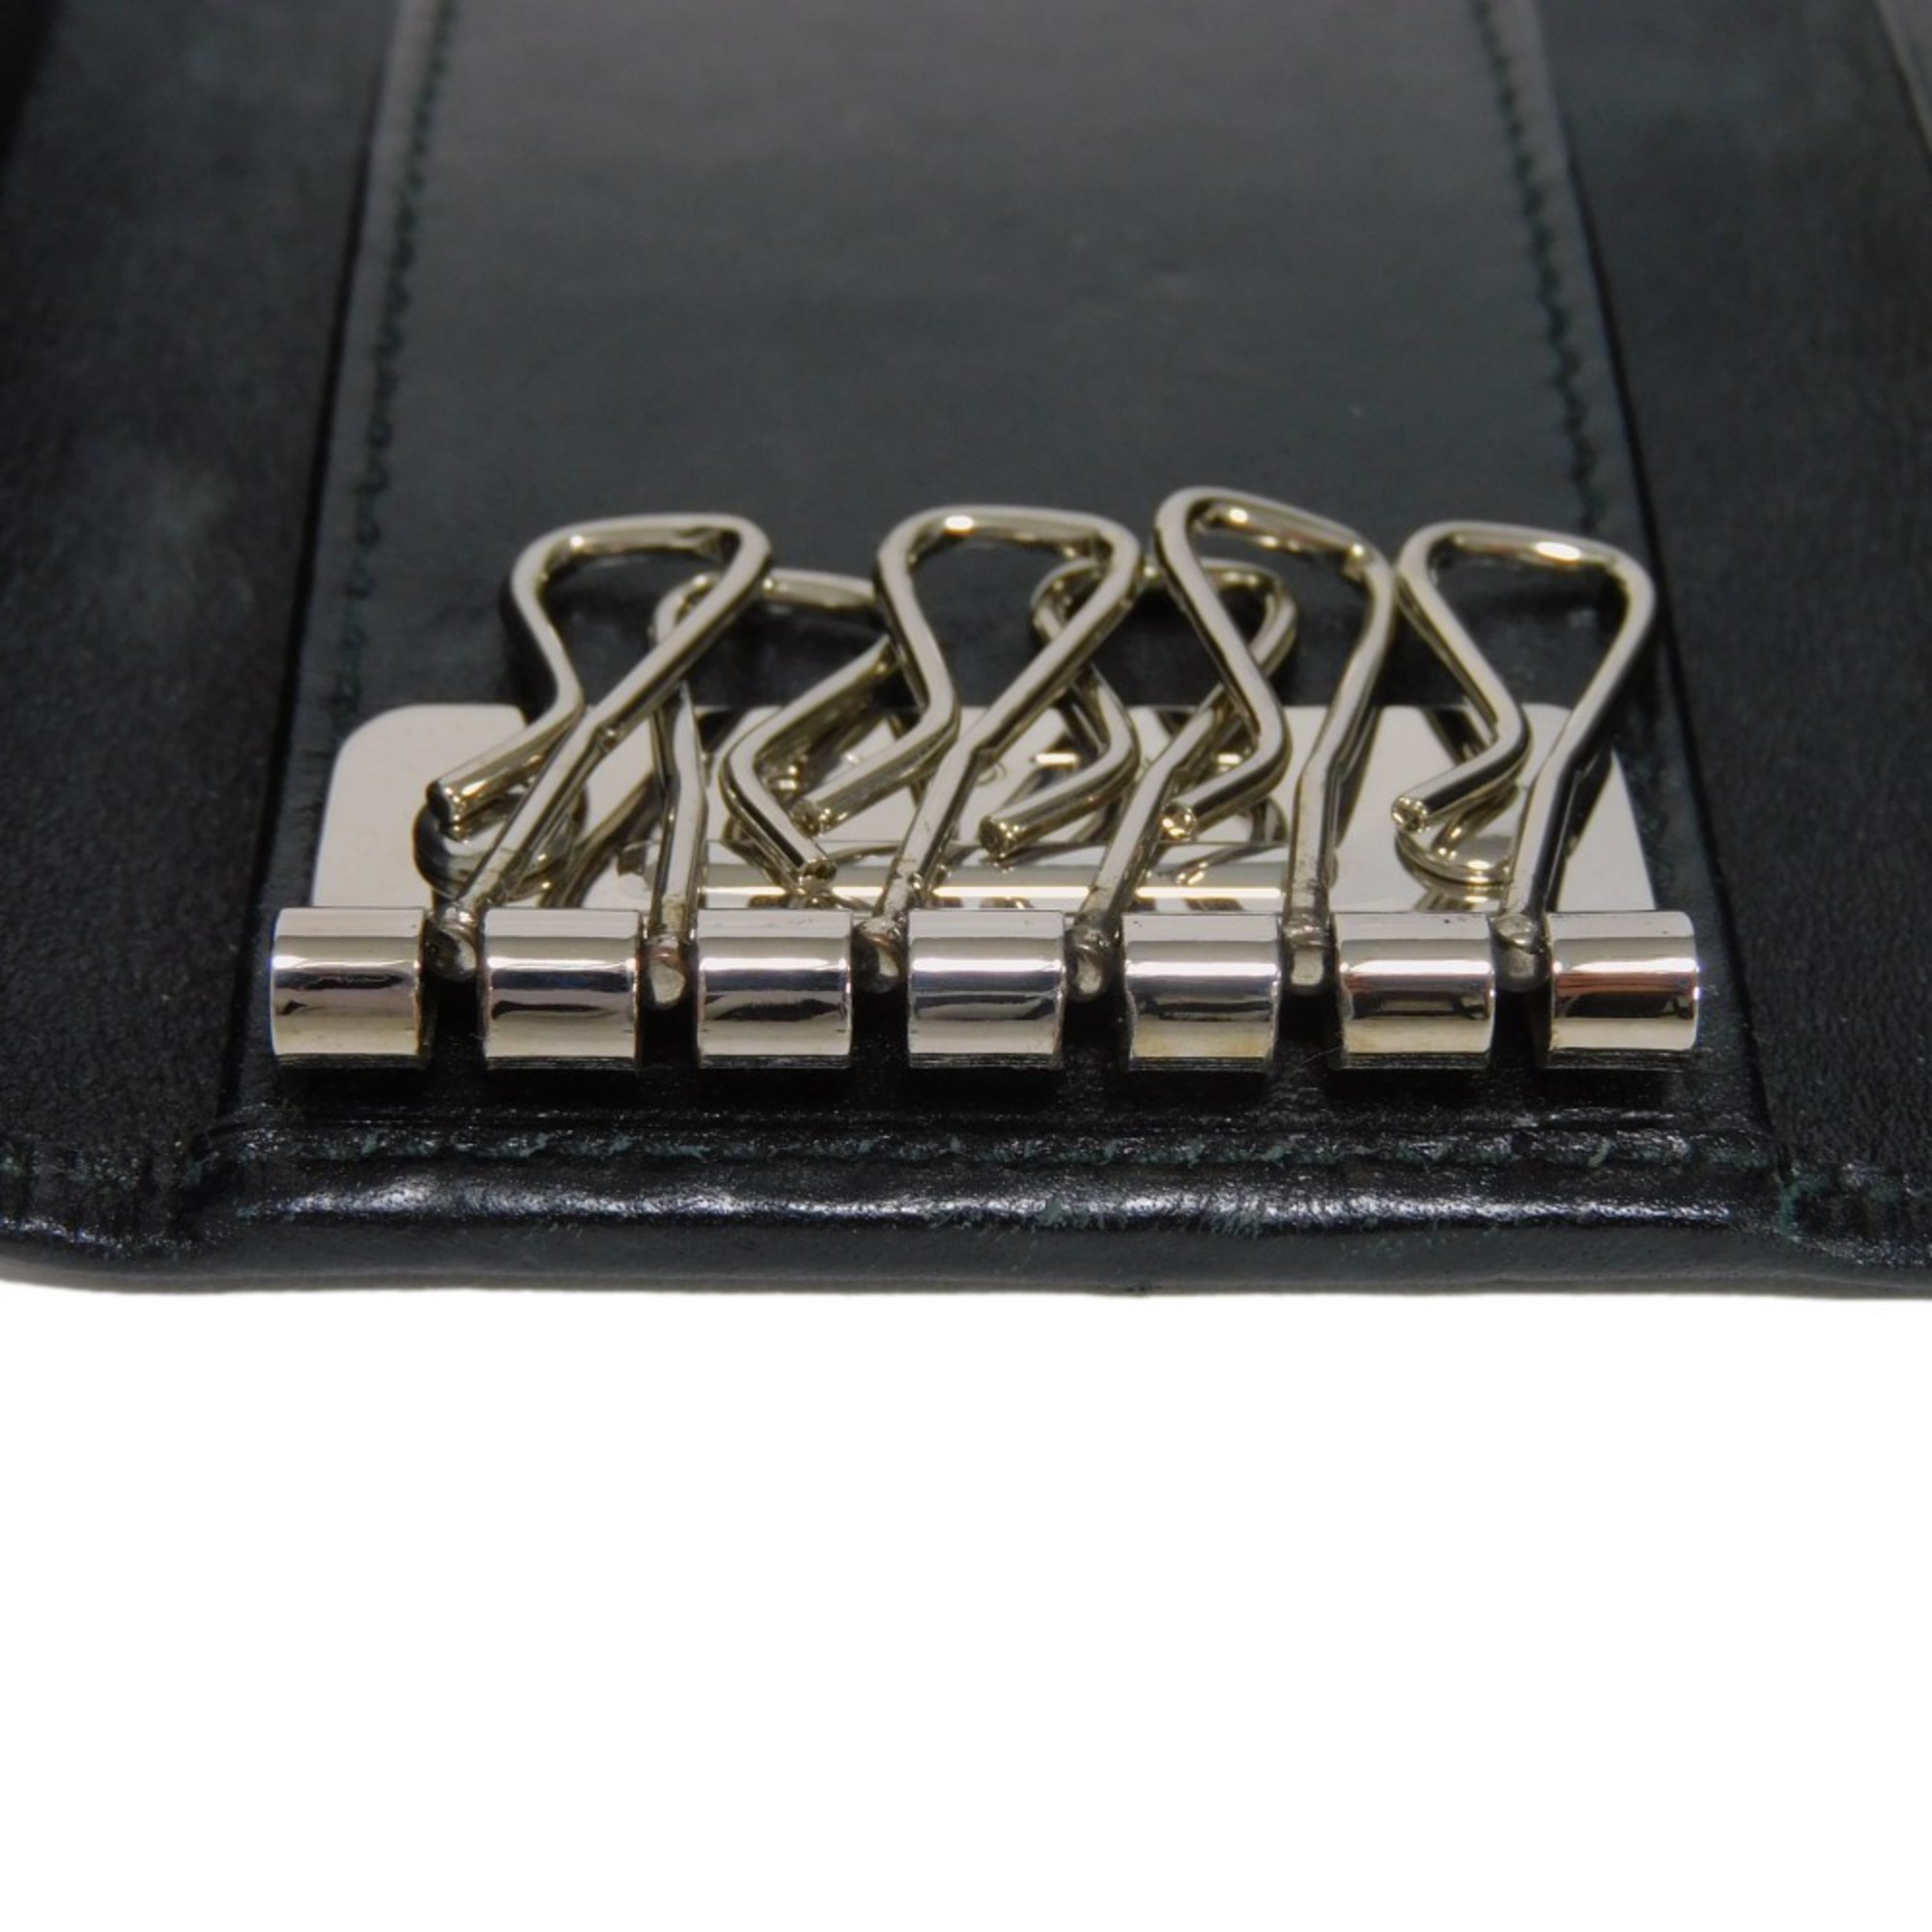 BVLGARI Key Case Weekend Holder Small Herringbone Snap Button Grey Black 6-Row Metal 32583 Men's